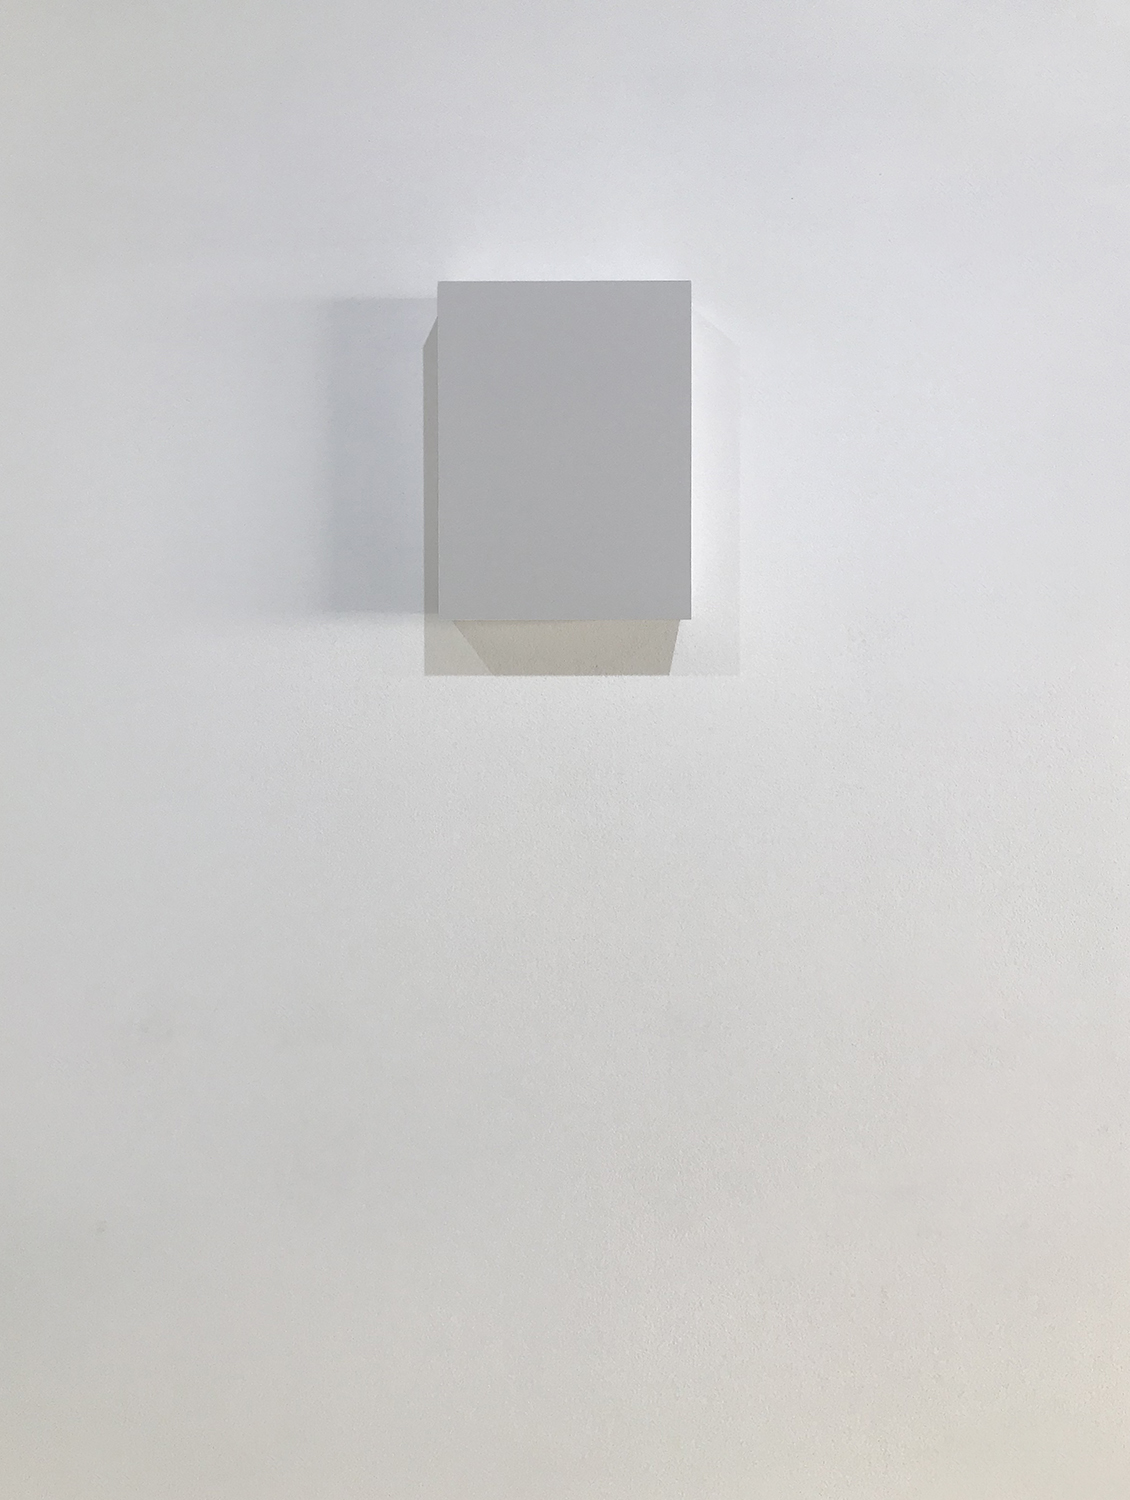 越野潤｜JUN KOSHINO<br>WORK16-5 (light gray), silkscreen paint on perspex, 150 x 100 x 50 mm, 2016